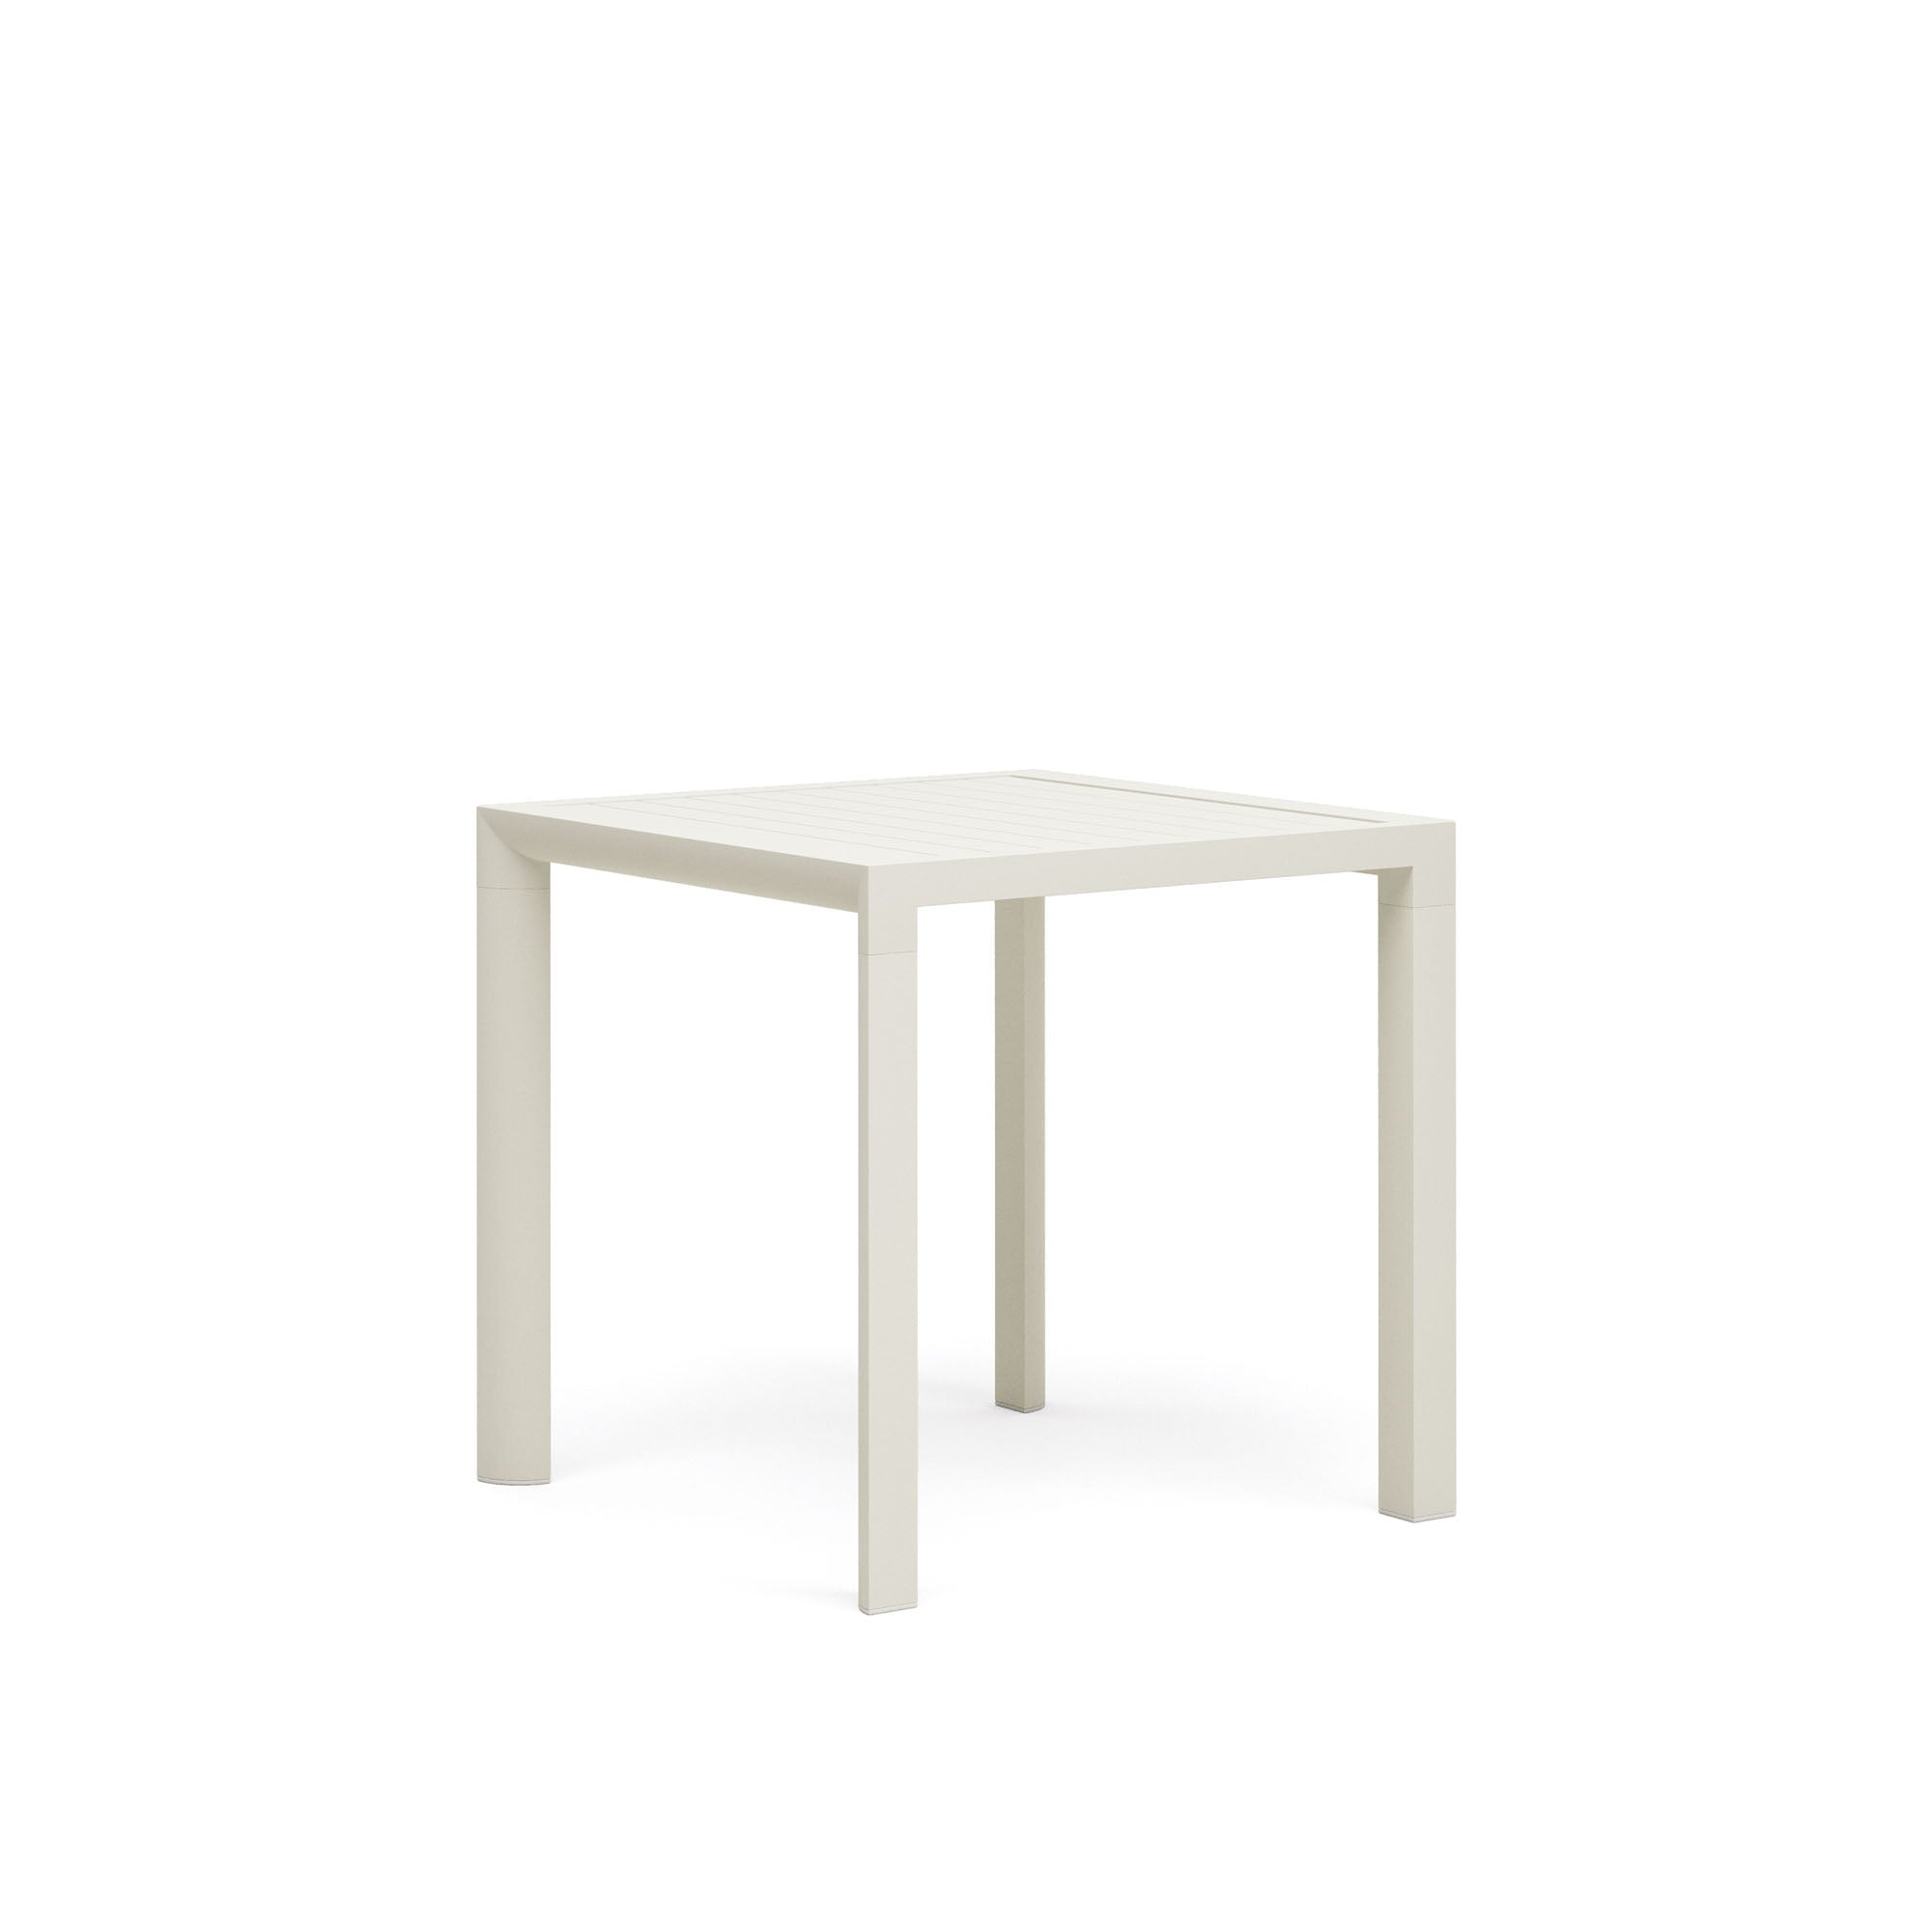 Culip aluminium outdoor table in powder coated white finish, 77 x 77 cm